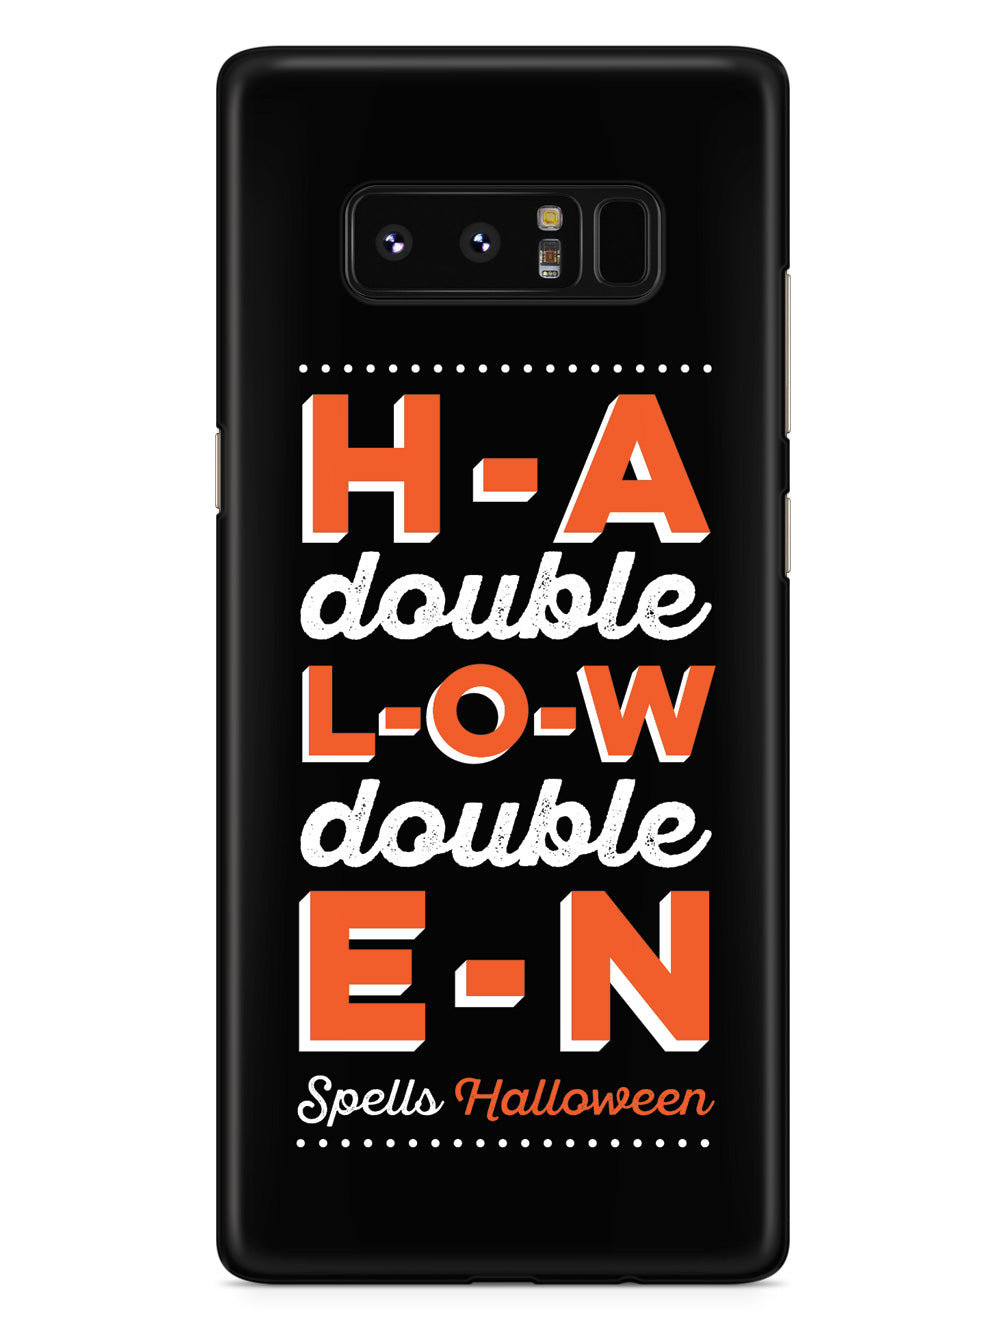 H-A-double-L-O-W-double-E-N Spells Halloween Case